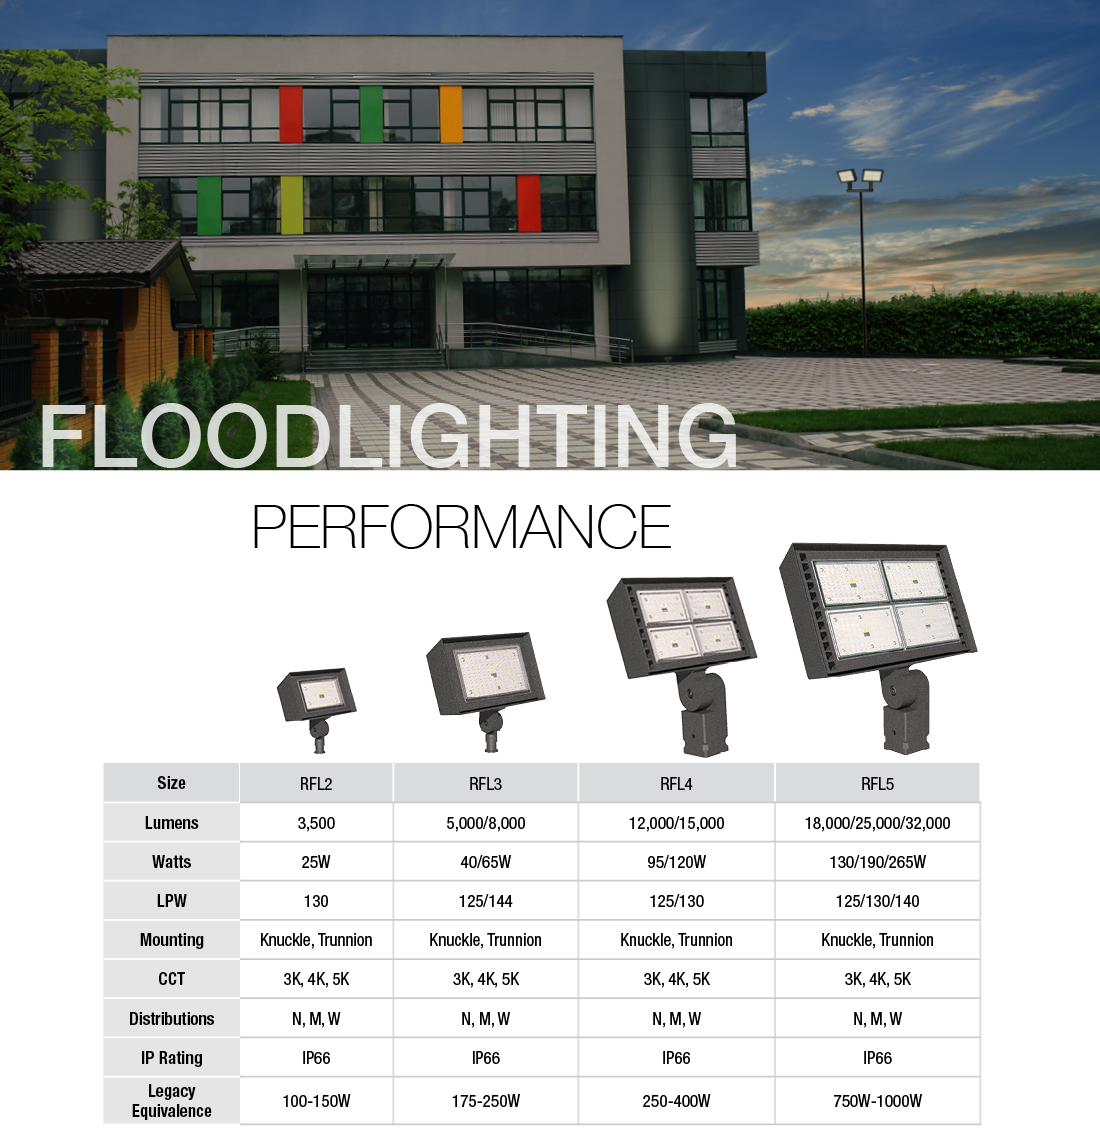 Floodlighting